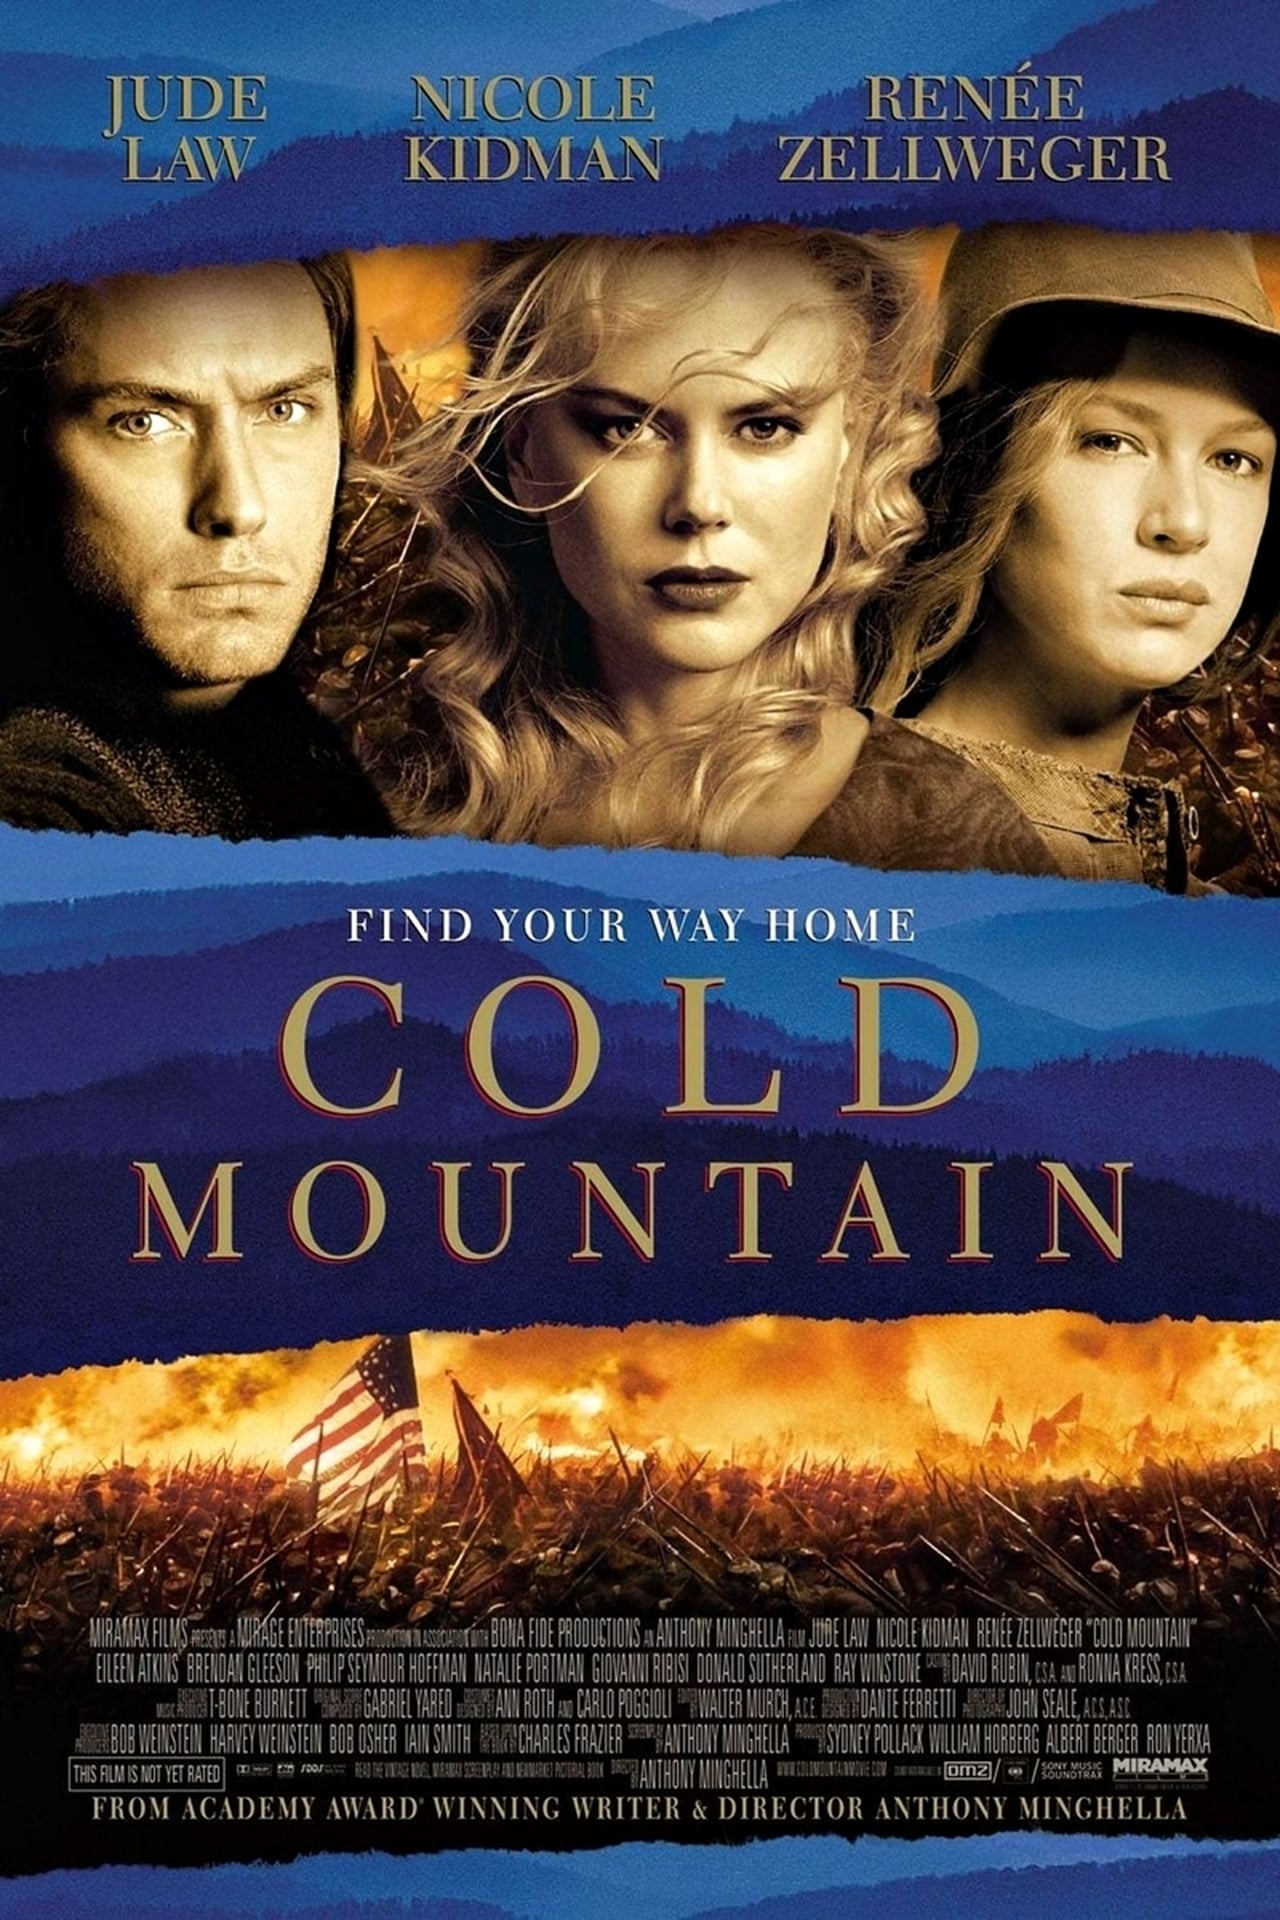 Cold Mountain (2003) 1839Kbps 23.976Fps 48Khz BluRay DTS-HD MA 5.1Ch Turkish Audio TAC